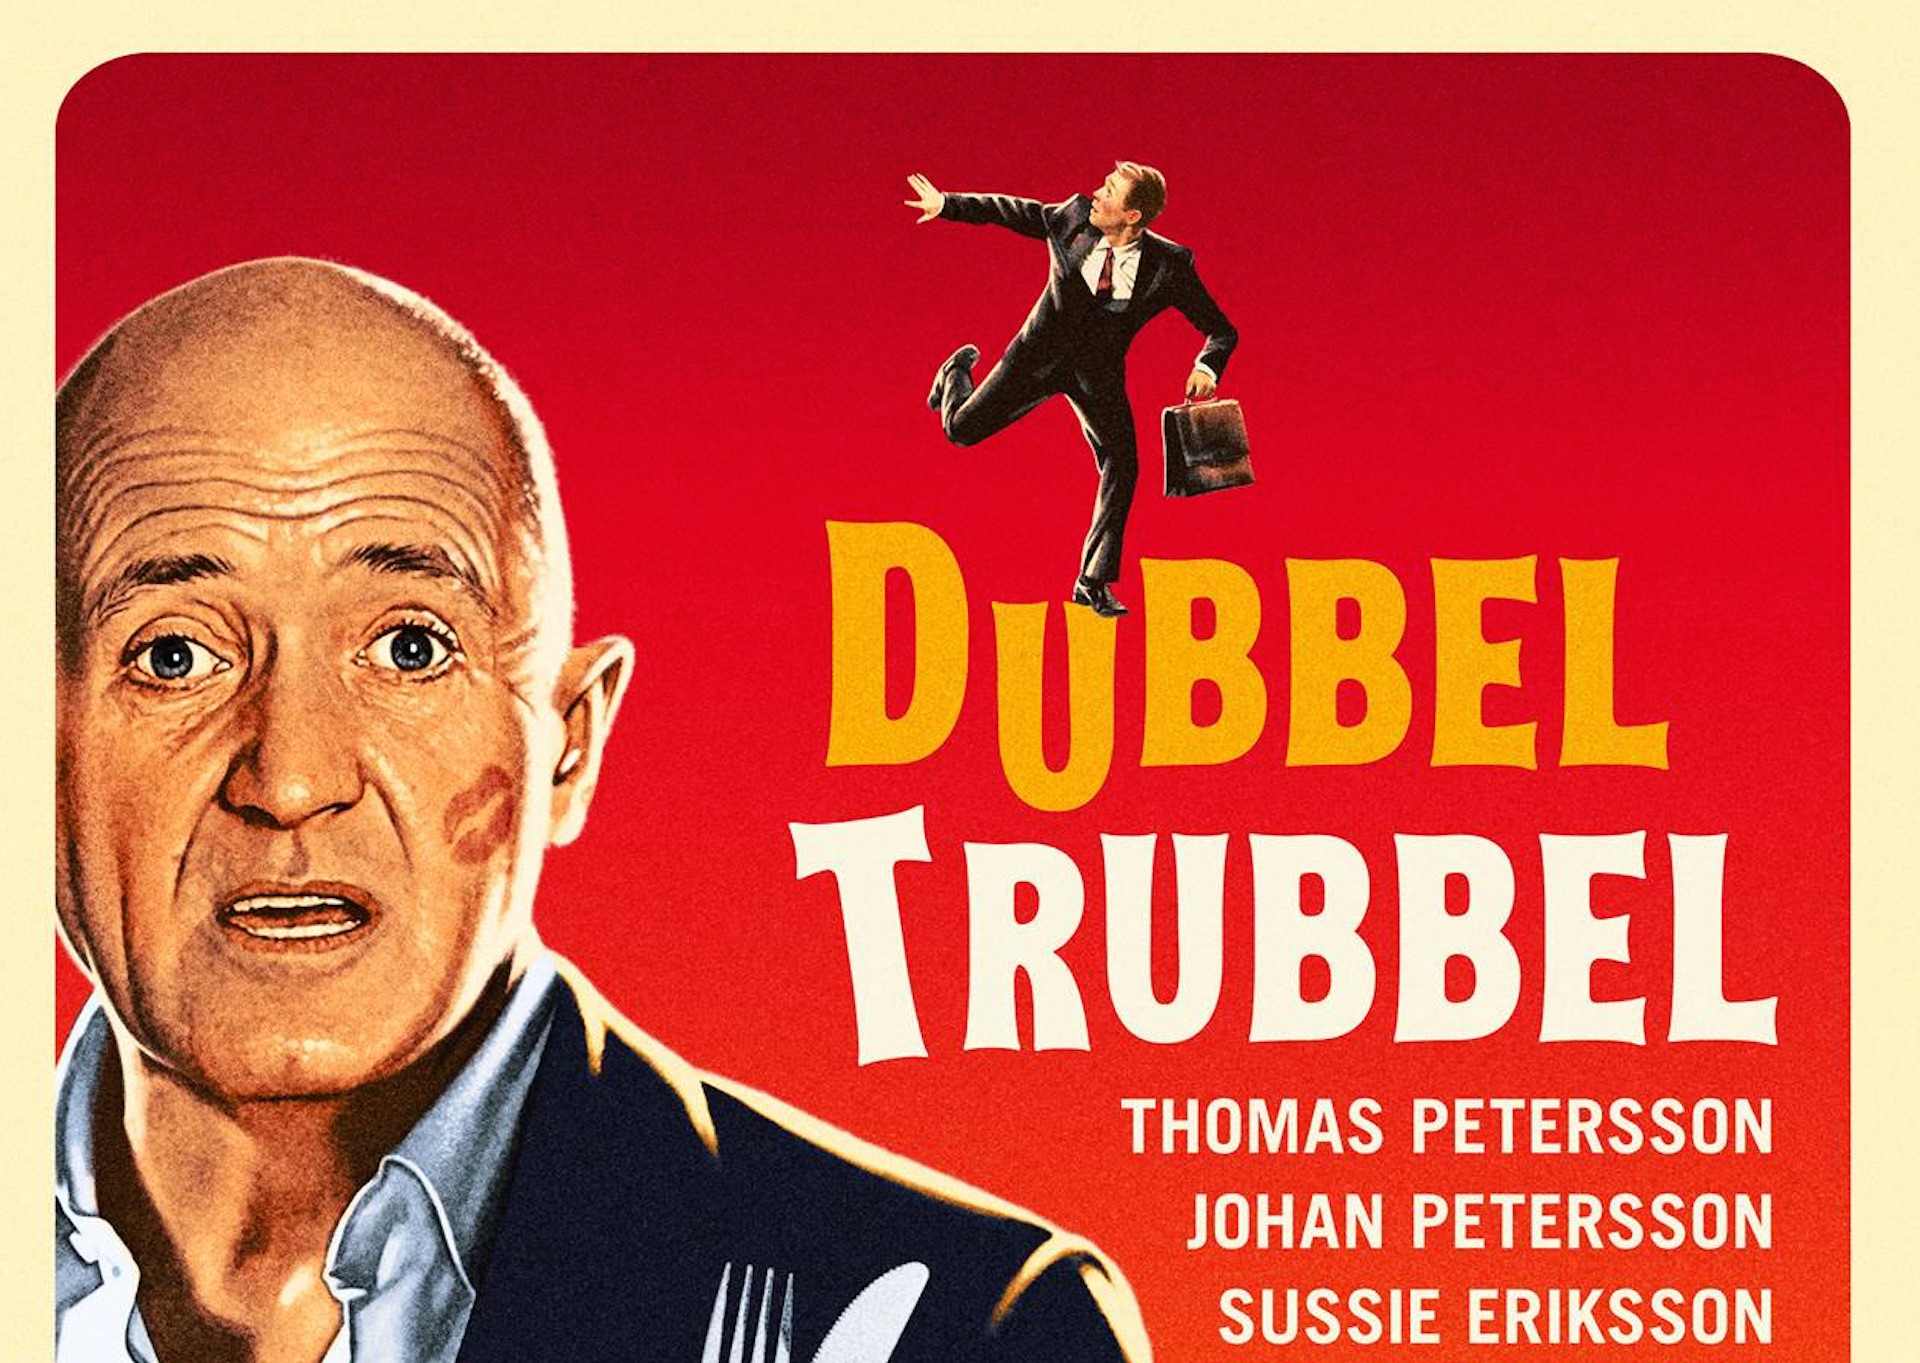 Thomas Petersson tar komedin ”DubbelTrubbel” till Krusenstiernska Teatern sommaren 2018! 